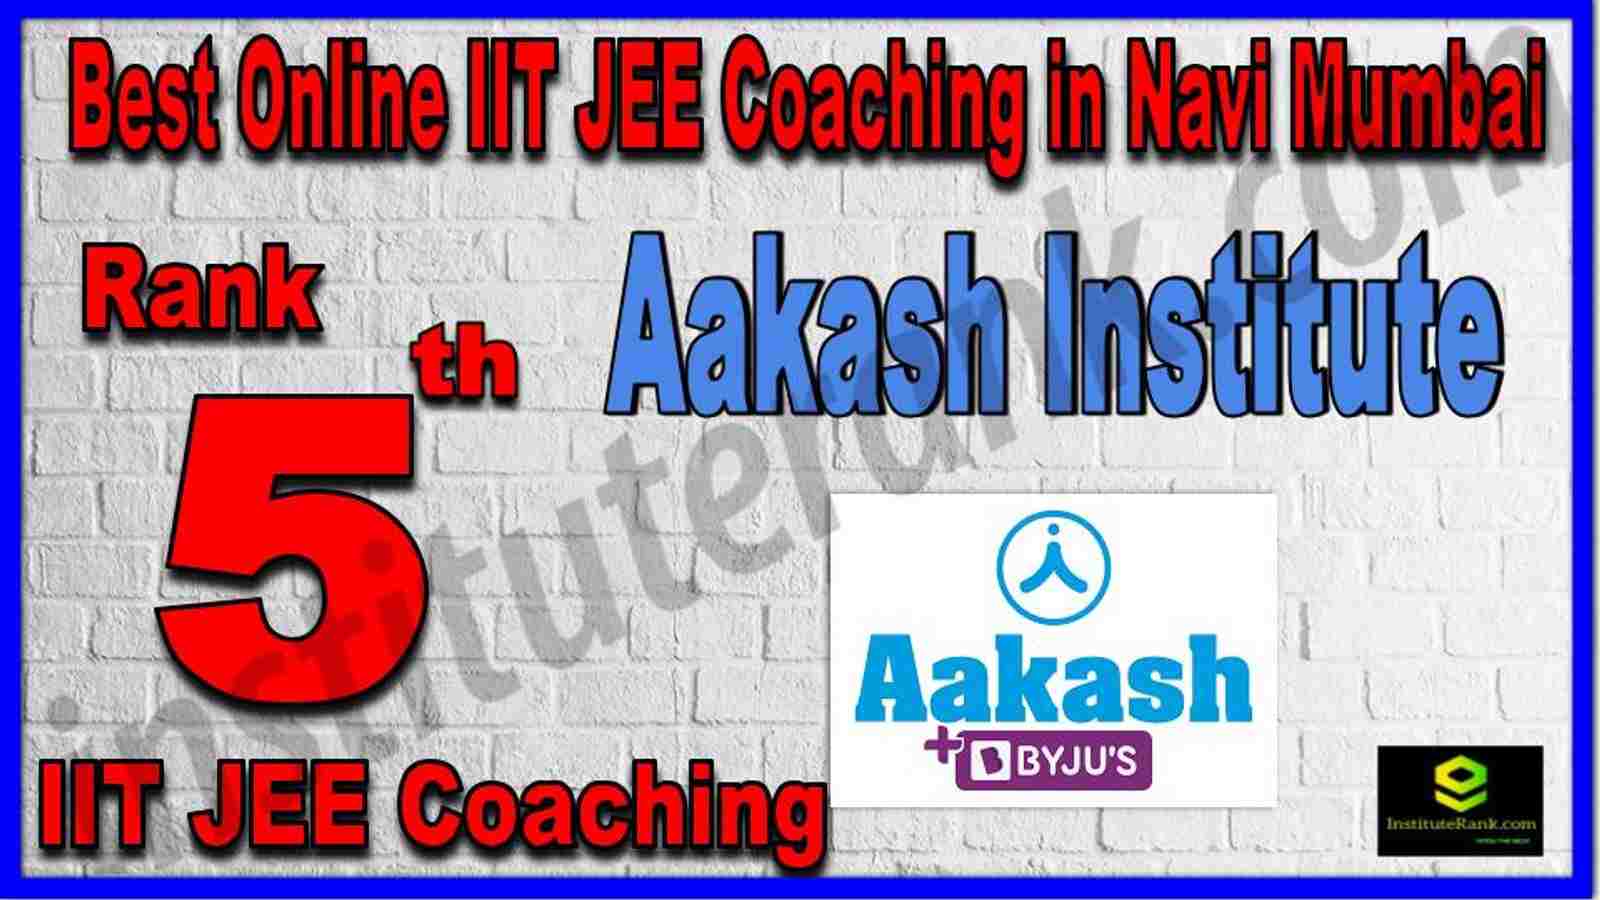 Rank 5th Best Online IIT JEE Coaching in Navi Mumbai